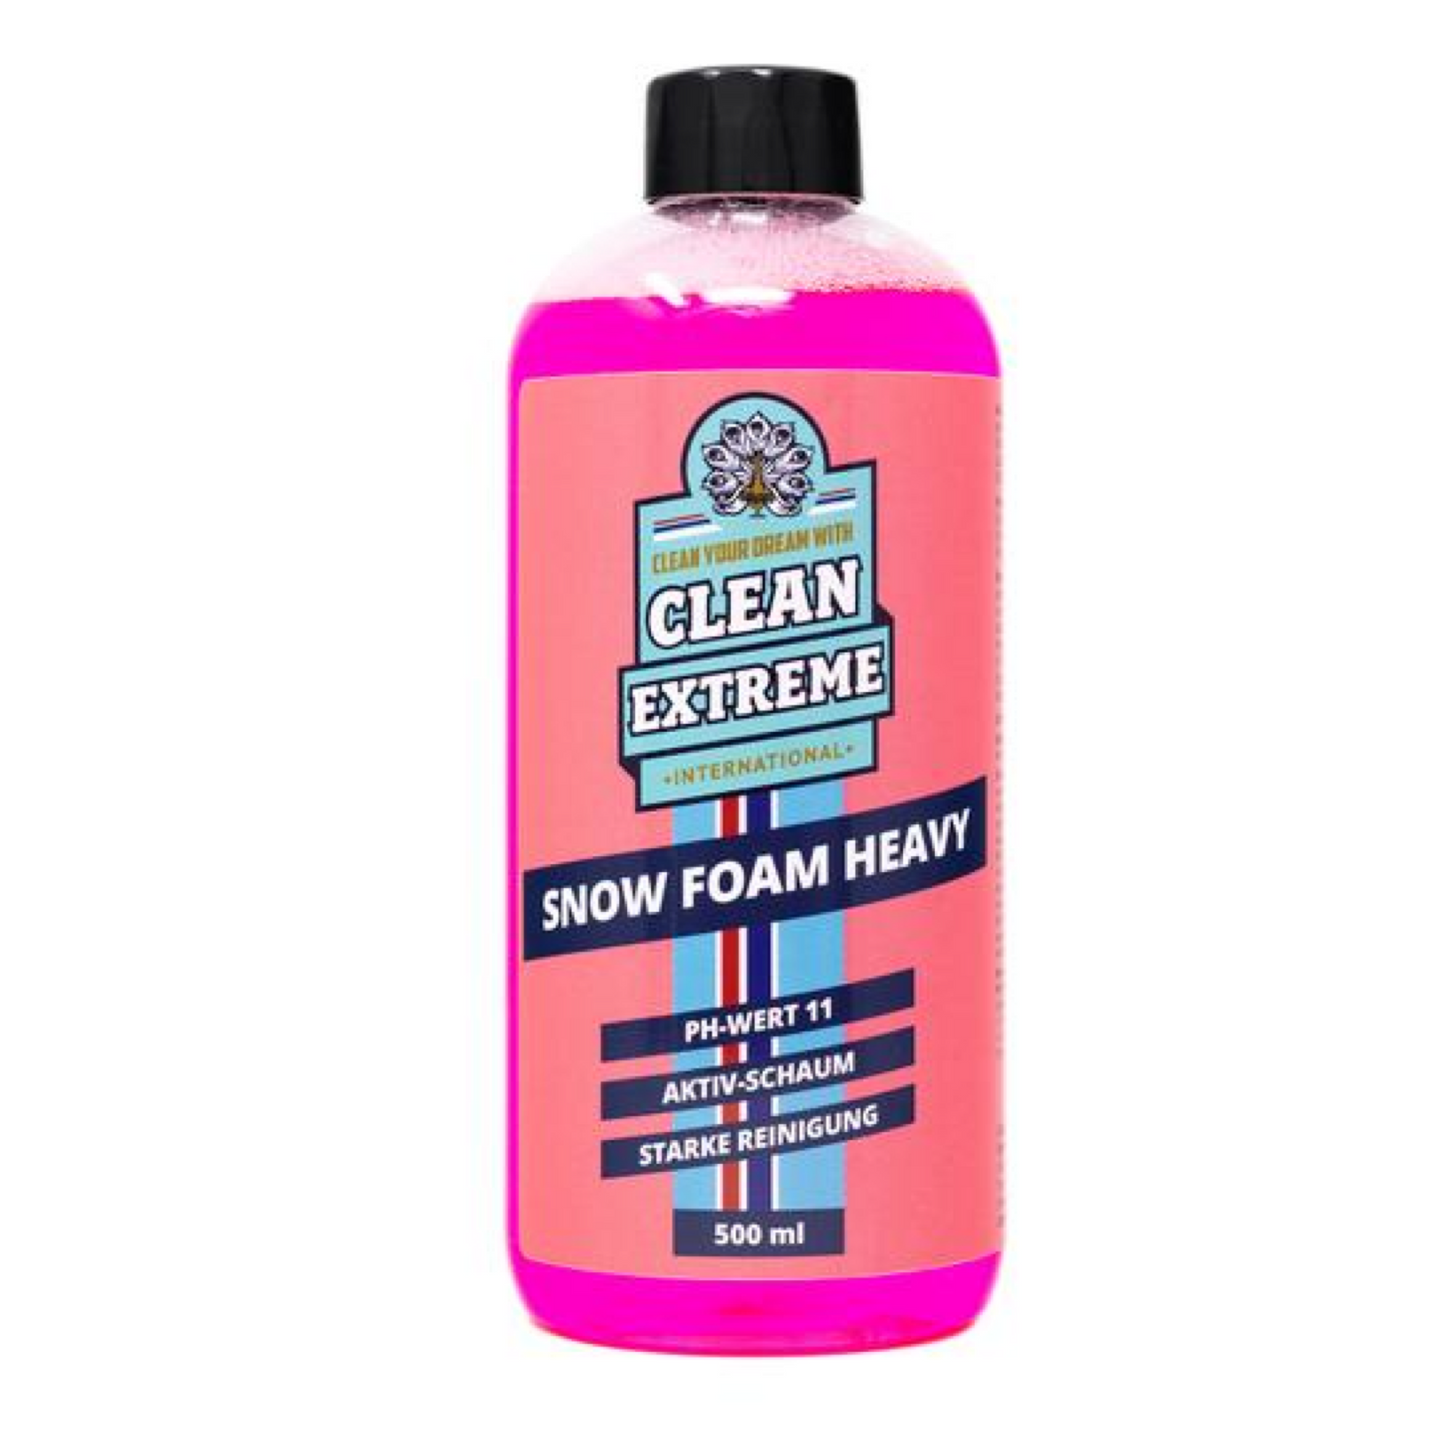 CLEANEXTREME Snow Foam HEAVY - Konzentrat - pH-11 - 500 ml